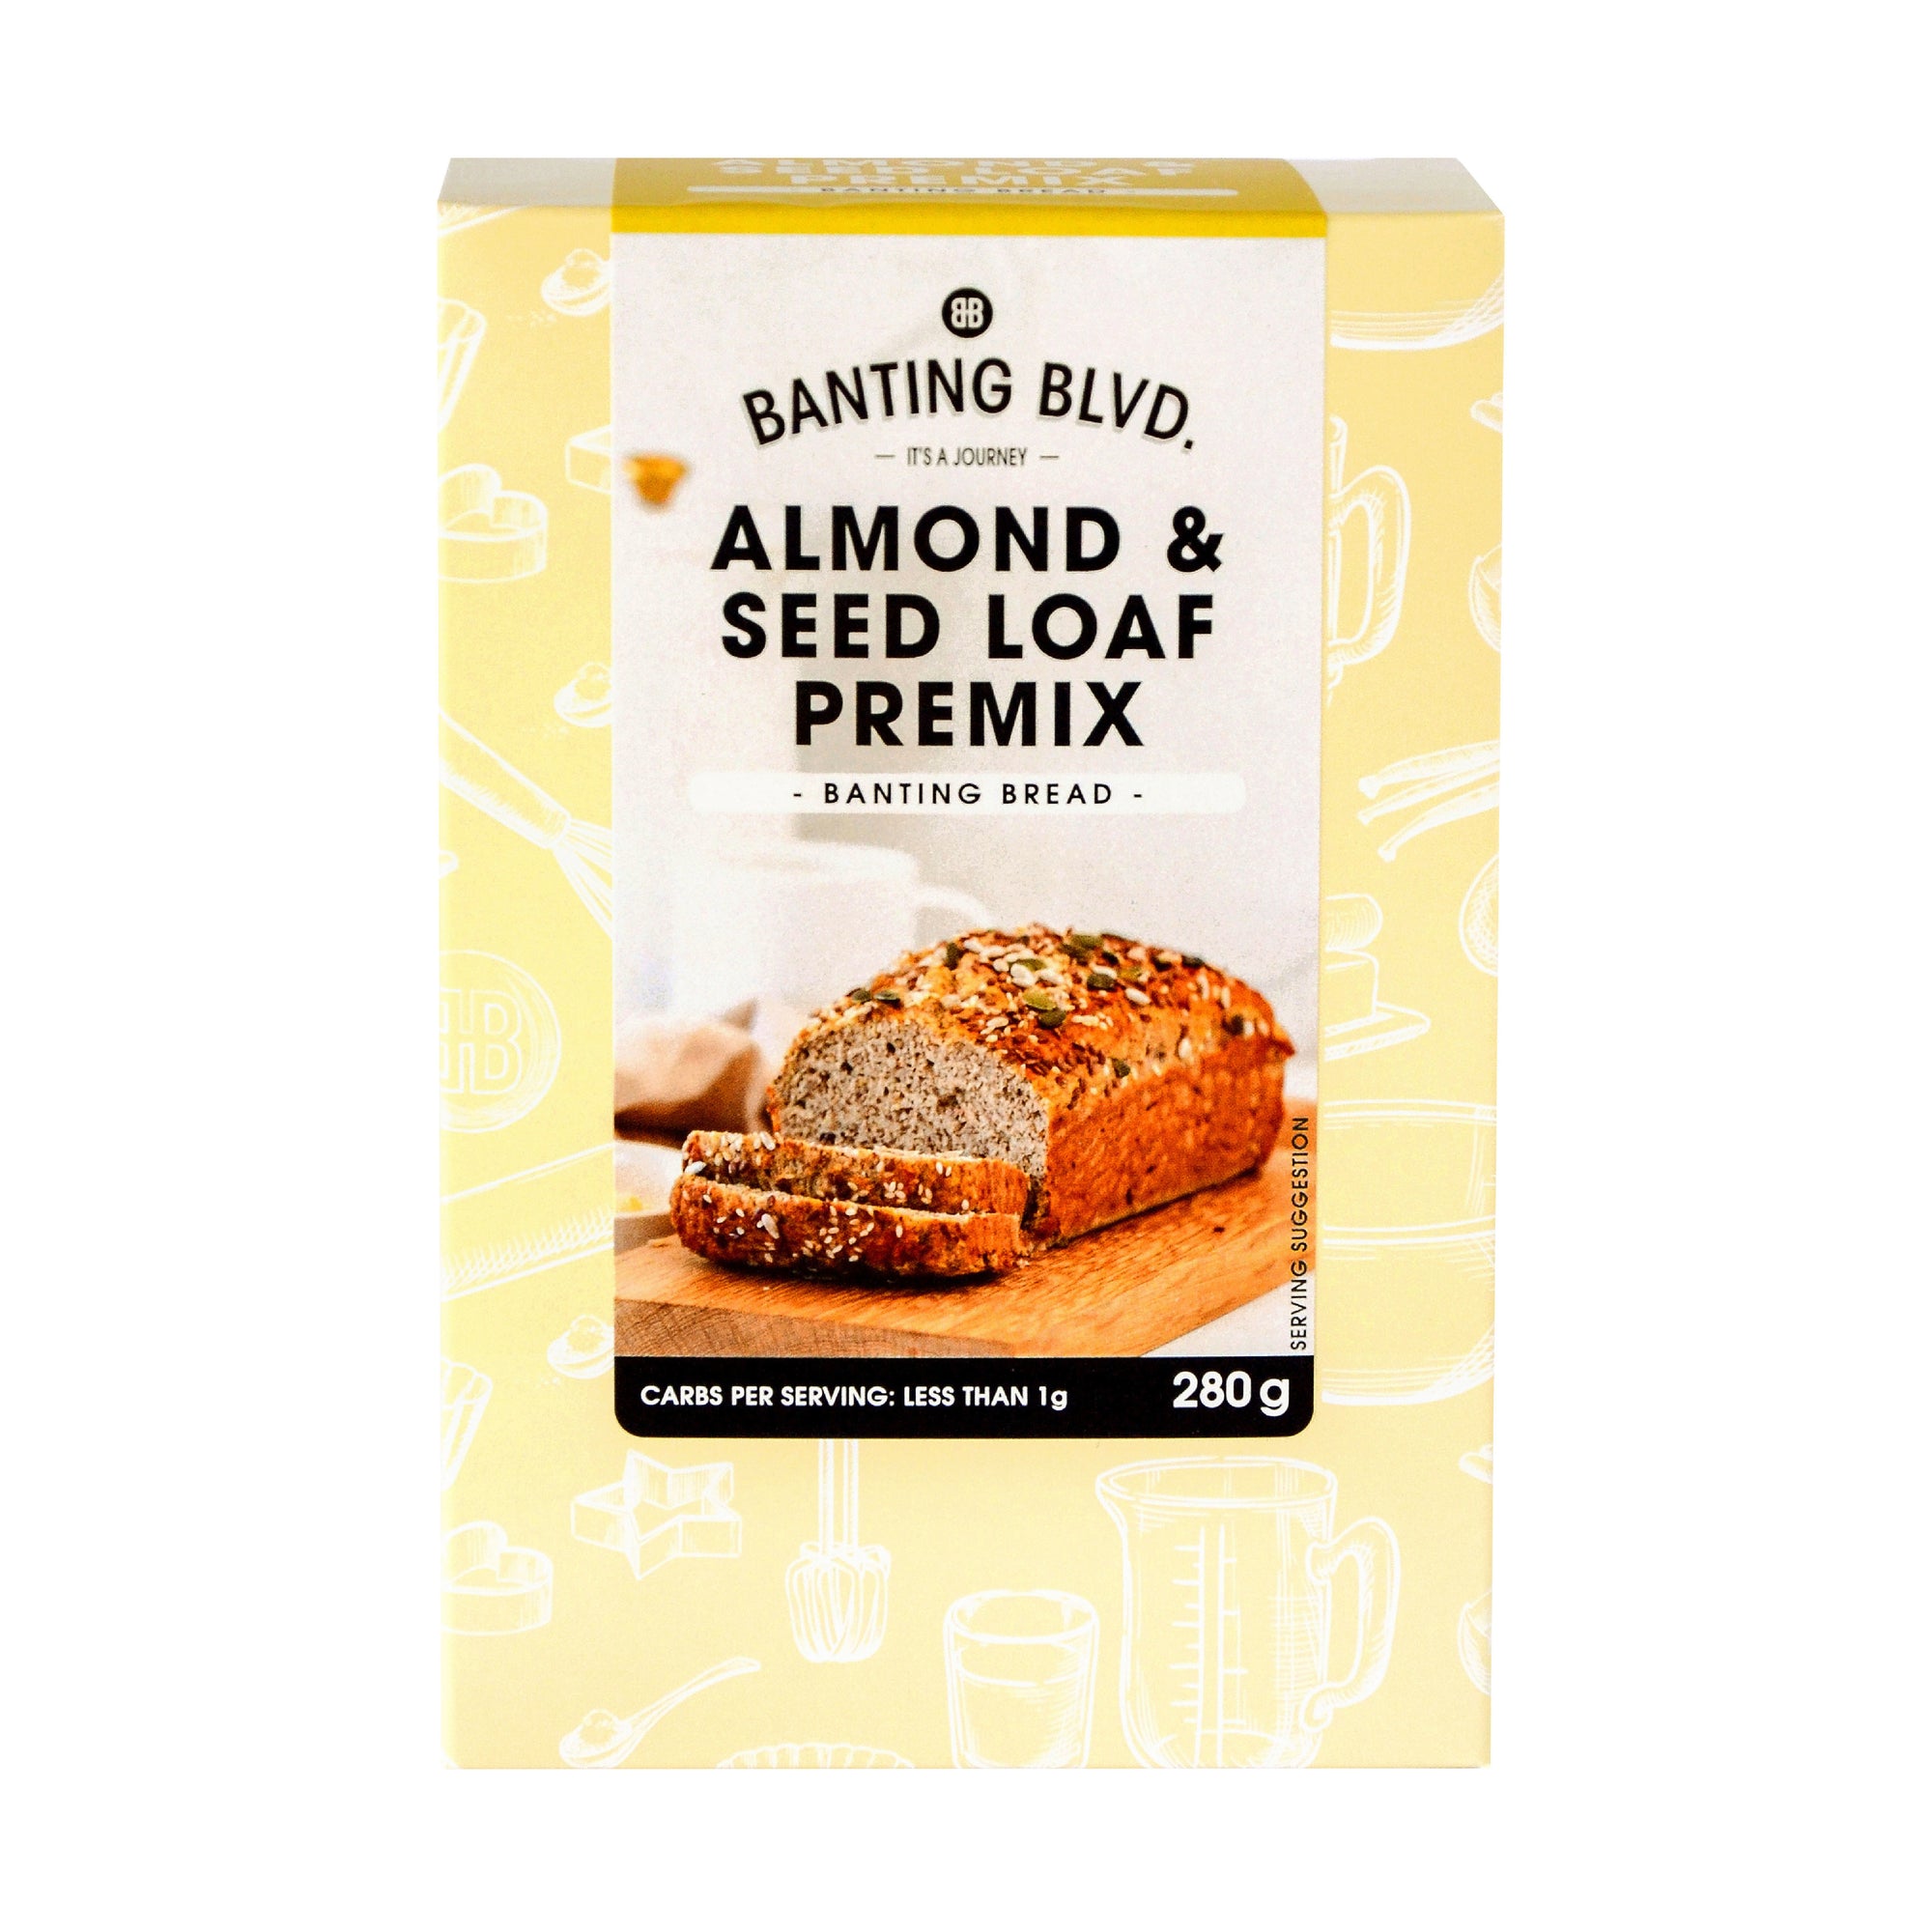 Almond & Seed Loaf Premix